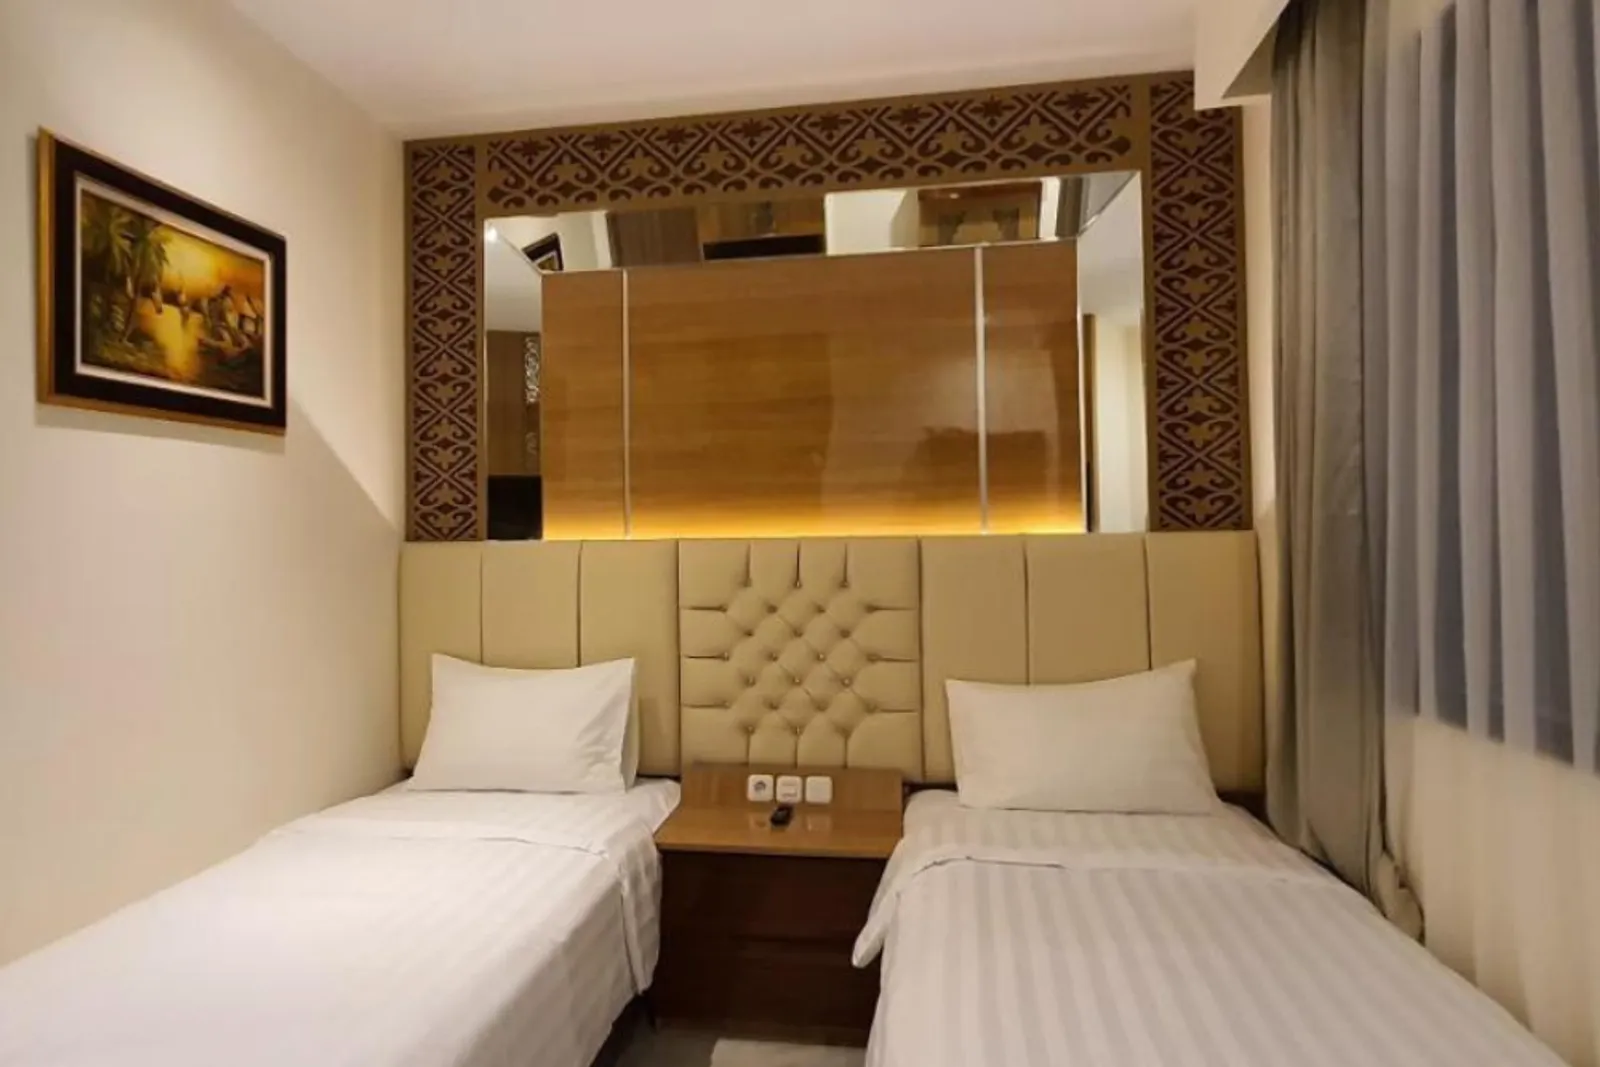 7 Rekomendasi Hotel Murah Dekat Alun-Alun Kota Bandung